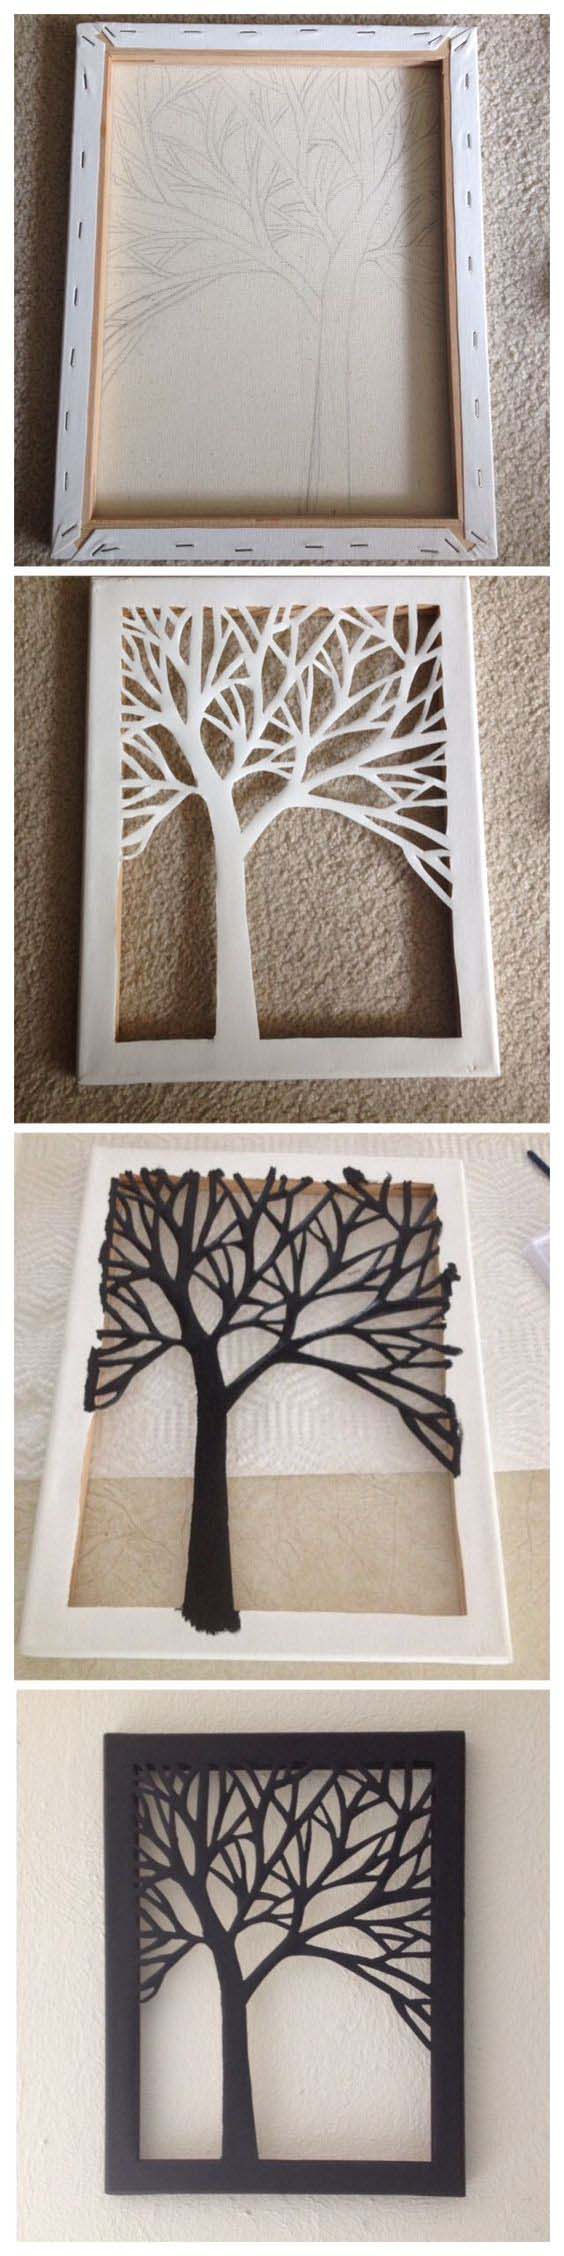 DIY Cut Canvas Tree Art #decorhomeideas